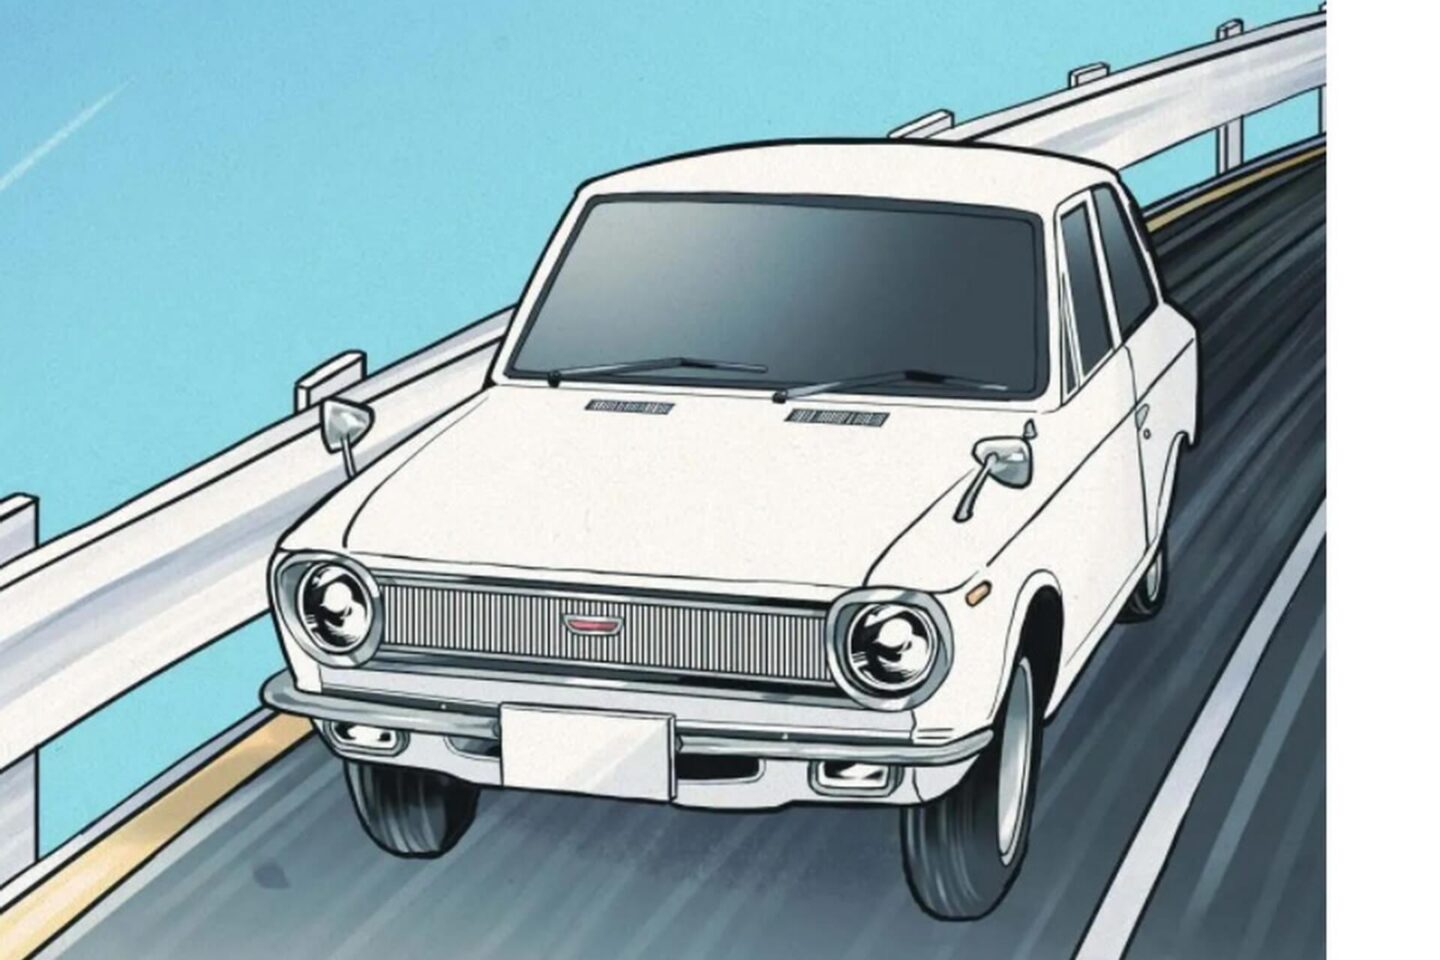 Toyota-Corolla-Manga